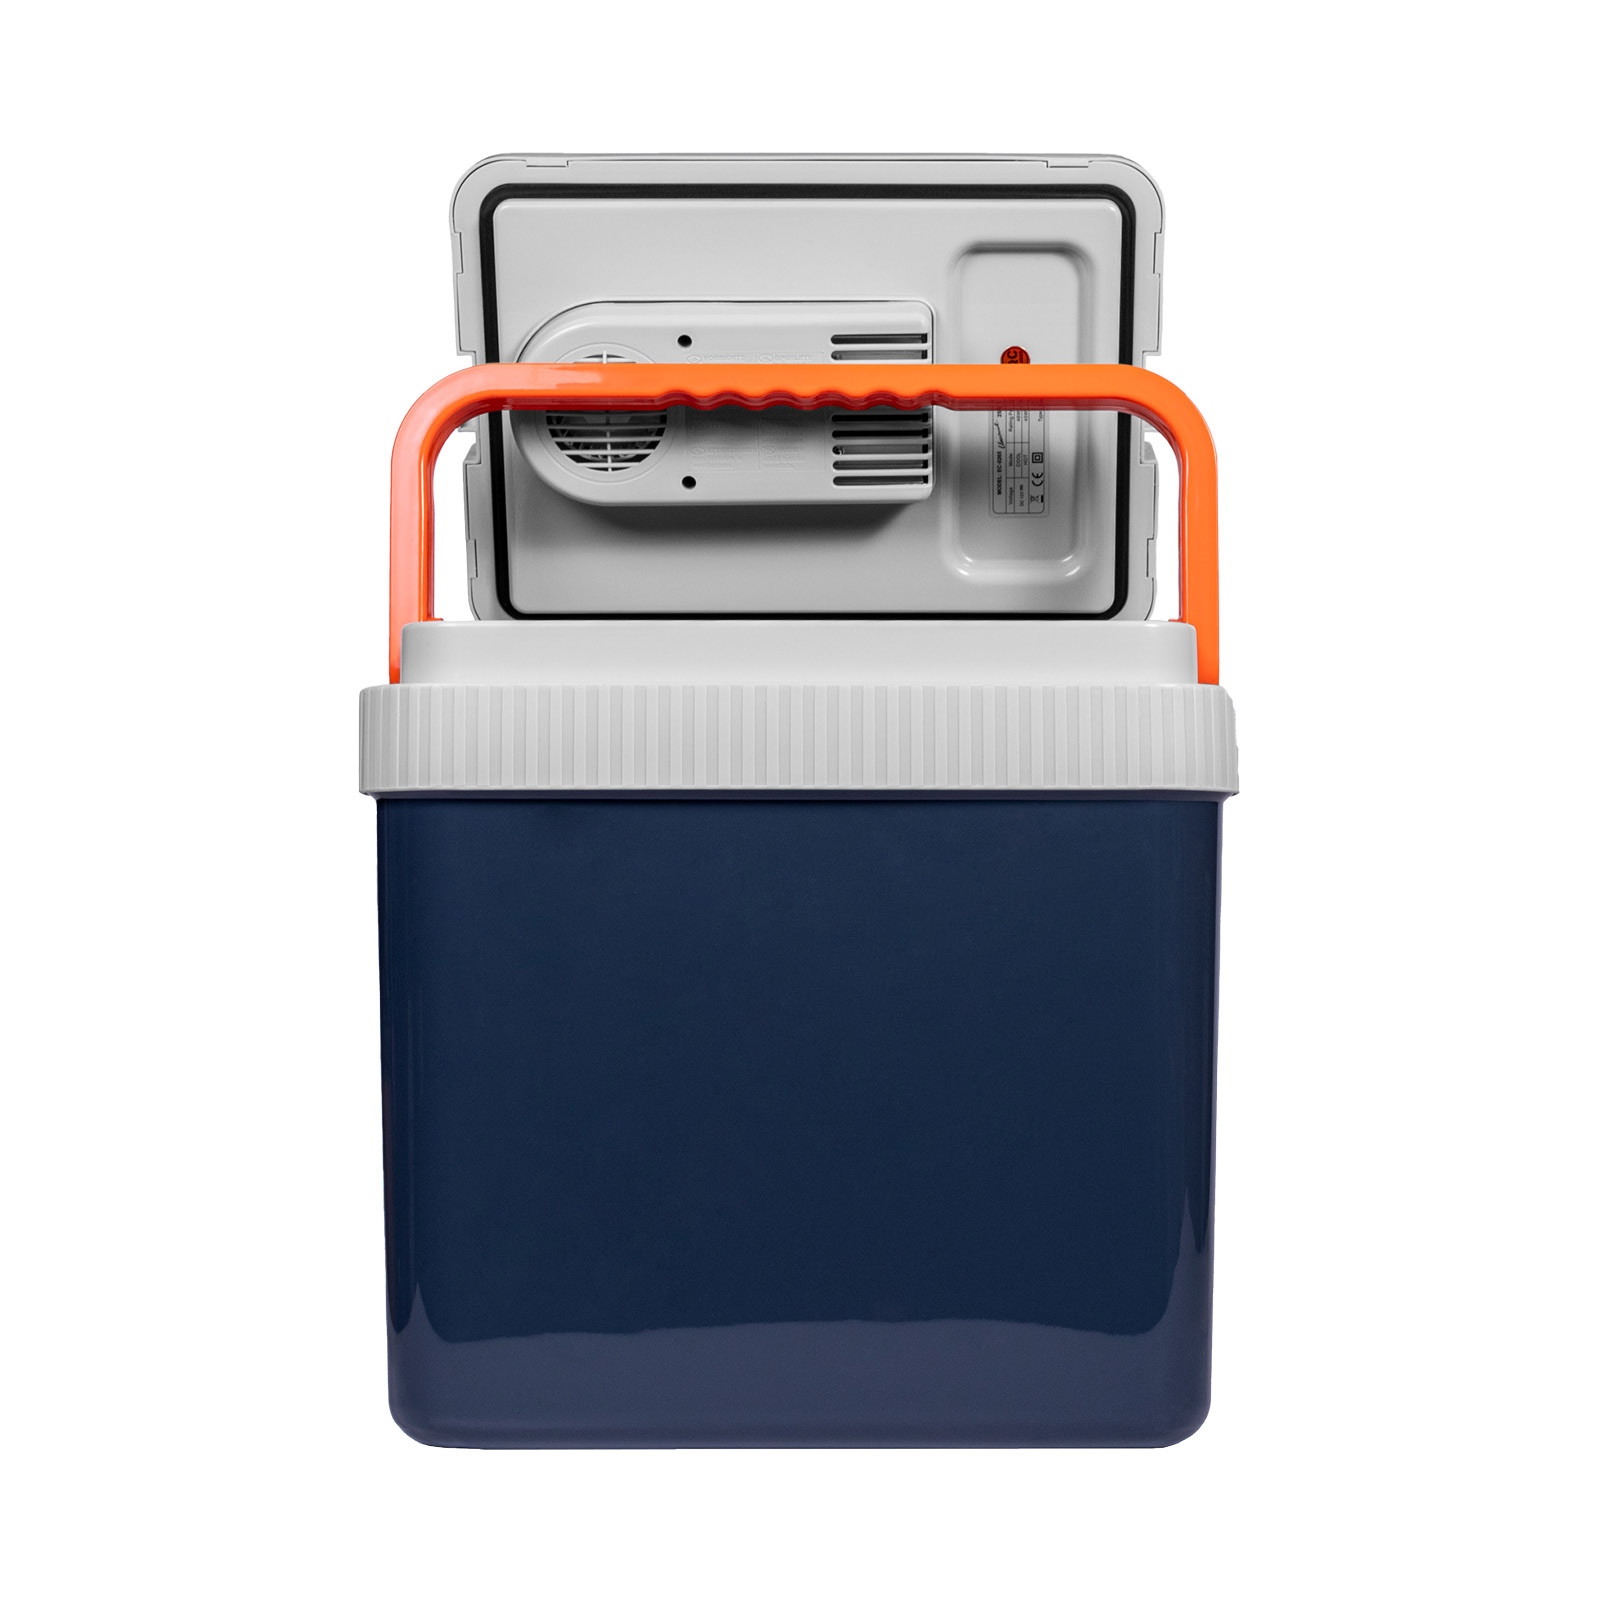 Холодильник Unicool 25 термоэлектр. (V=25л, разн. с t окр. ср -20гр, нагр до 60гр)